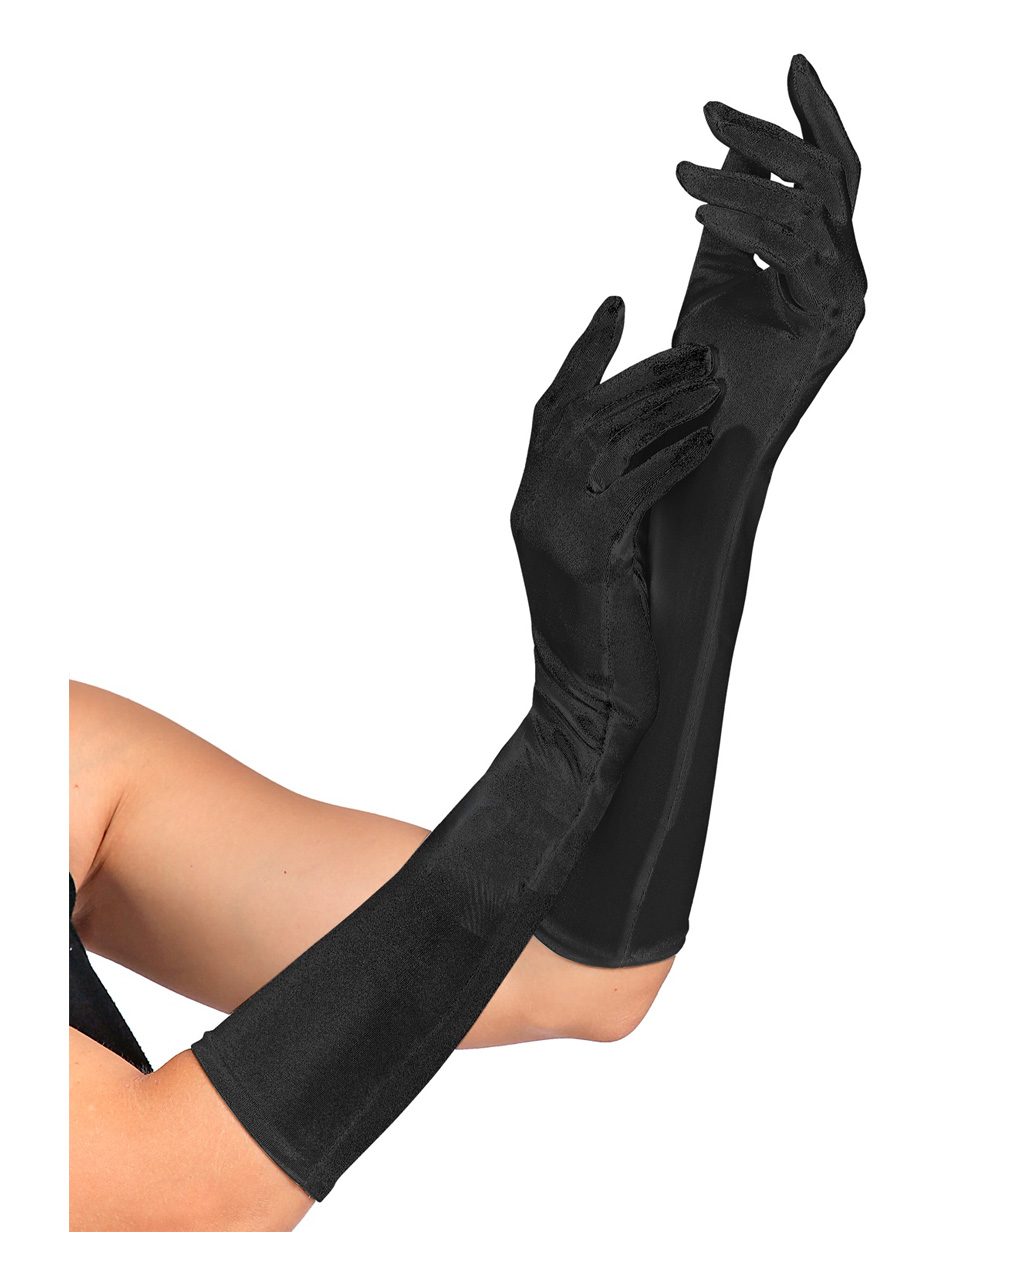 Satin gloves cosplay fan image